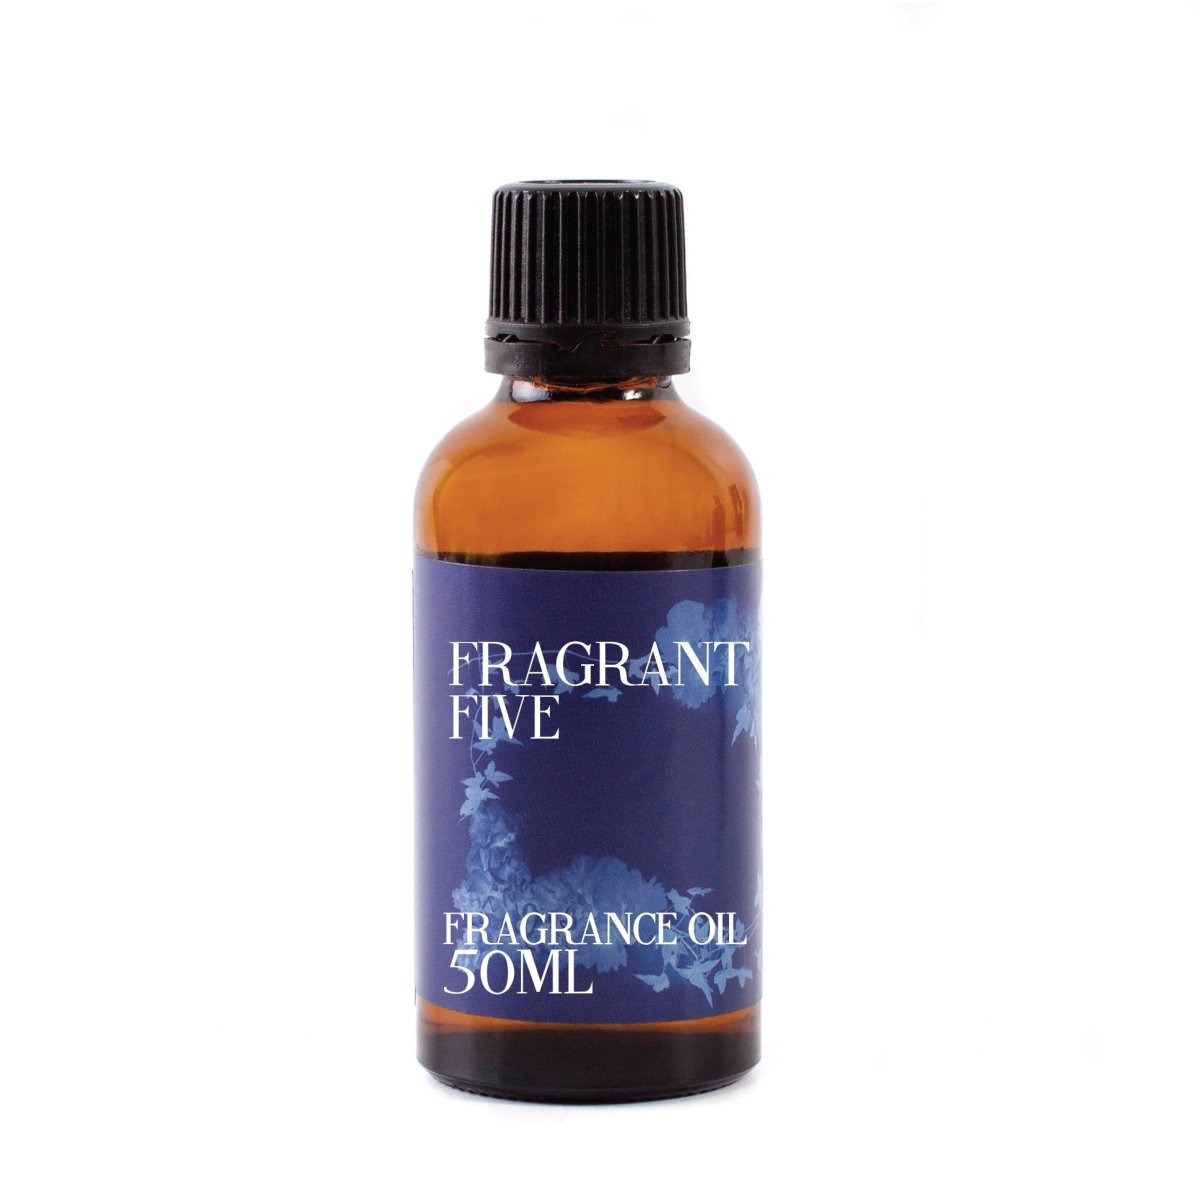 Fragrant Five Fragrance Oil - Mystic Moments UK